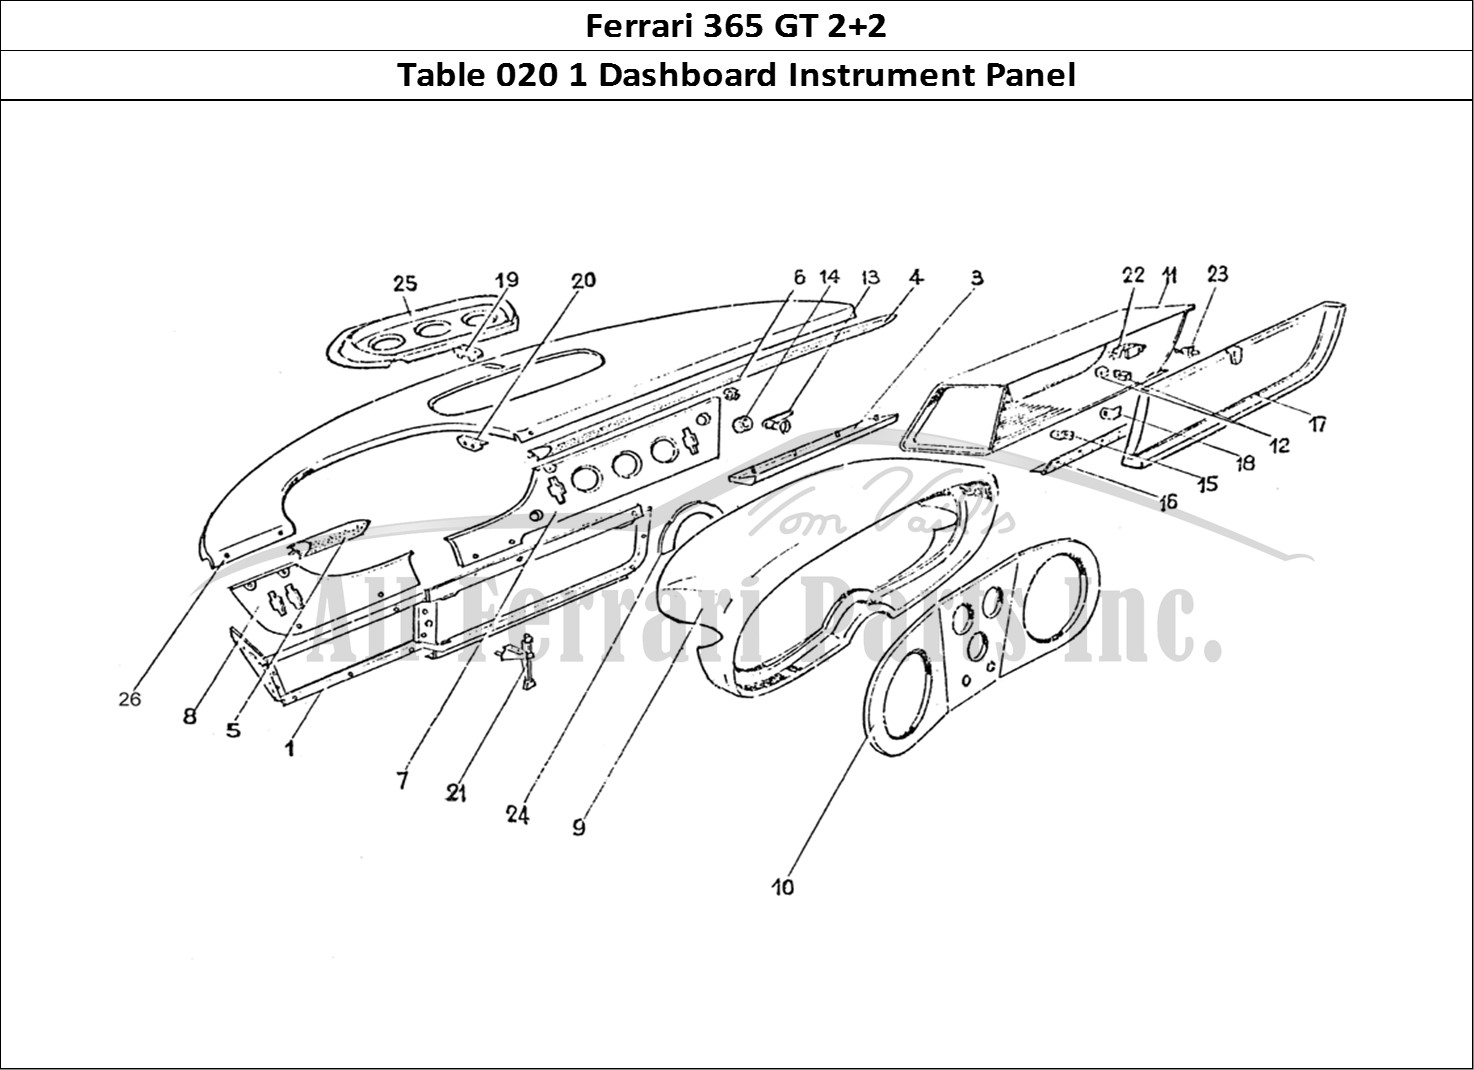 Ferrari Parts Ferrari 365 GT 2+2 (Coachwork) Page 020 Dash board